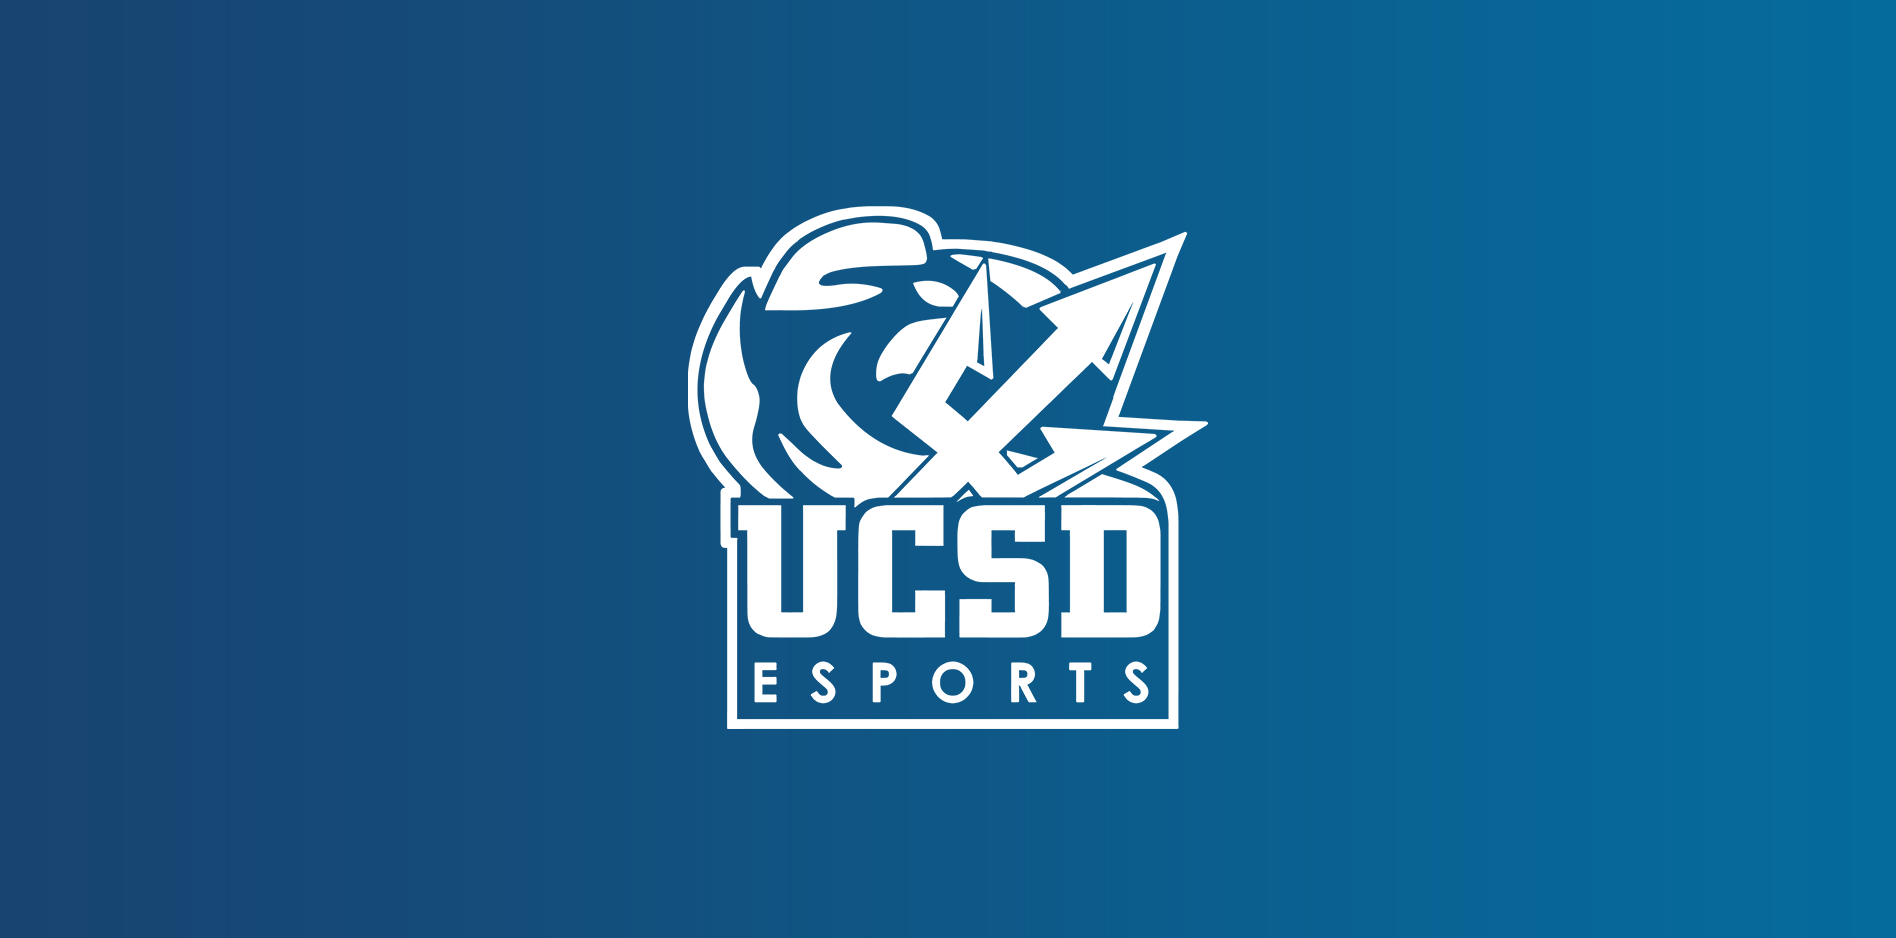 UCSD esports